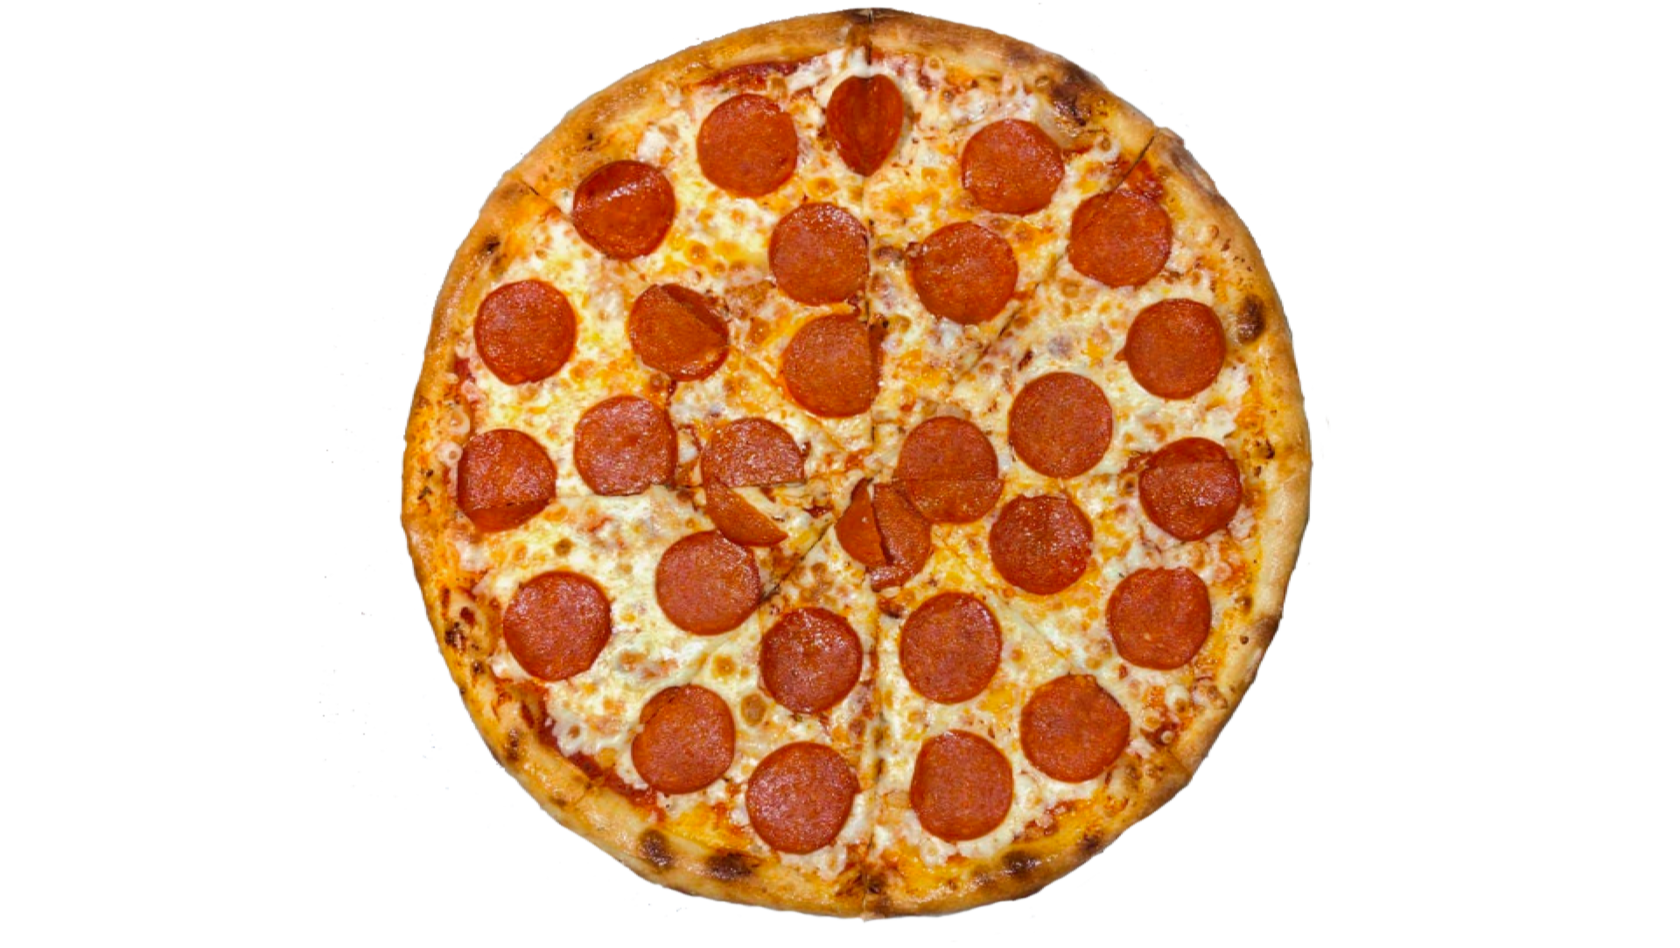 сколько стоит пицца пепперони в москве фото 119